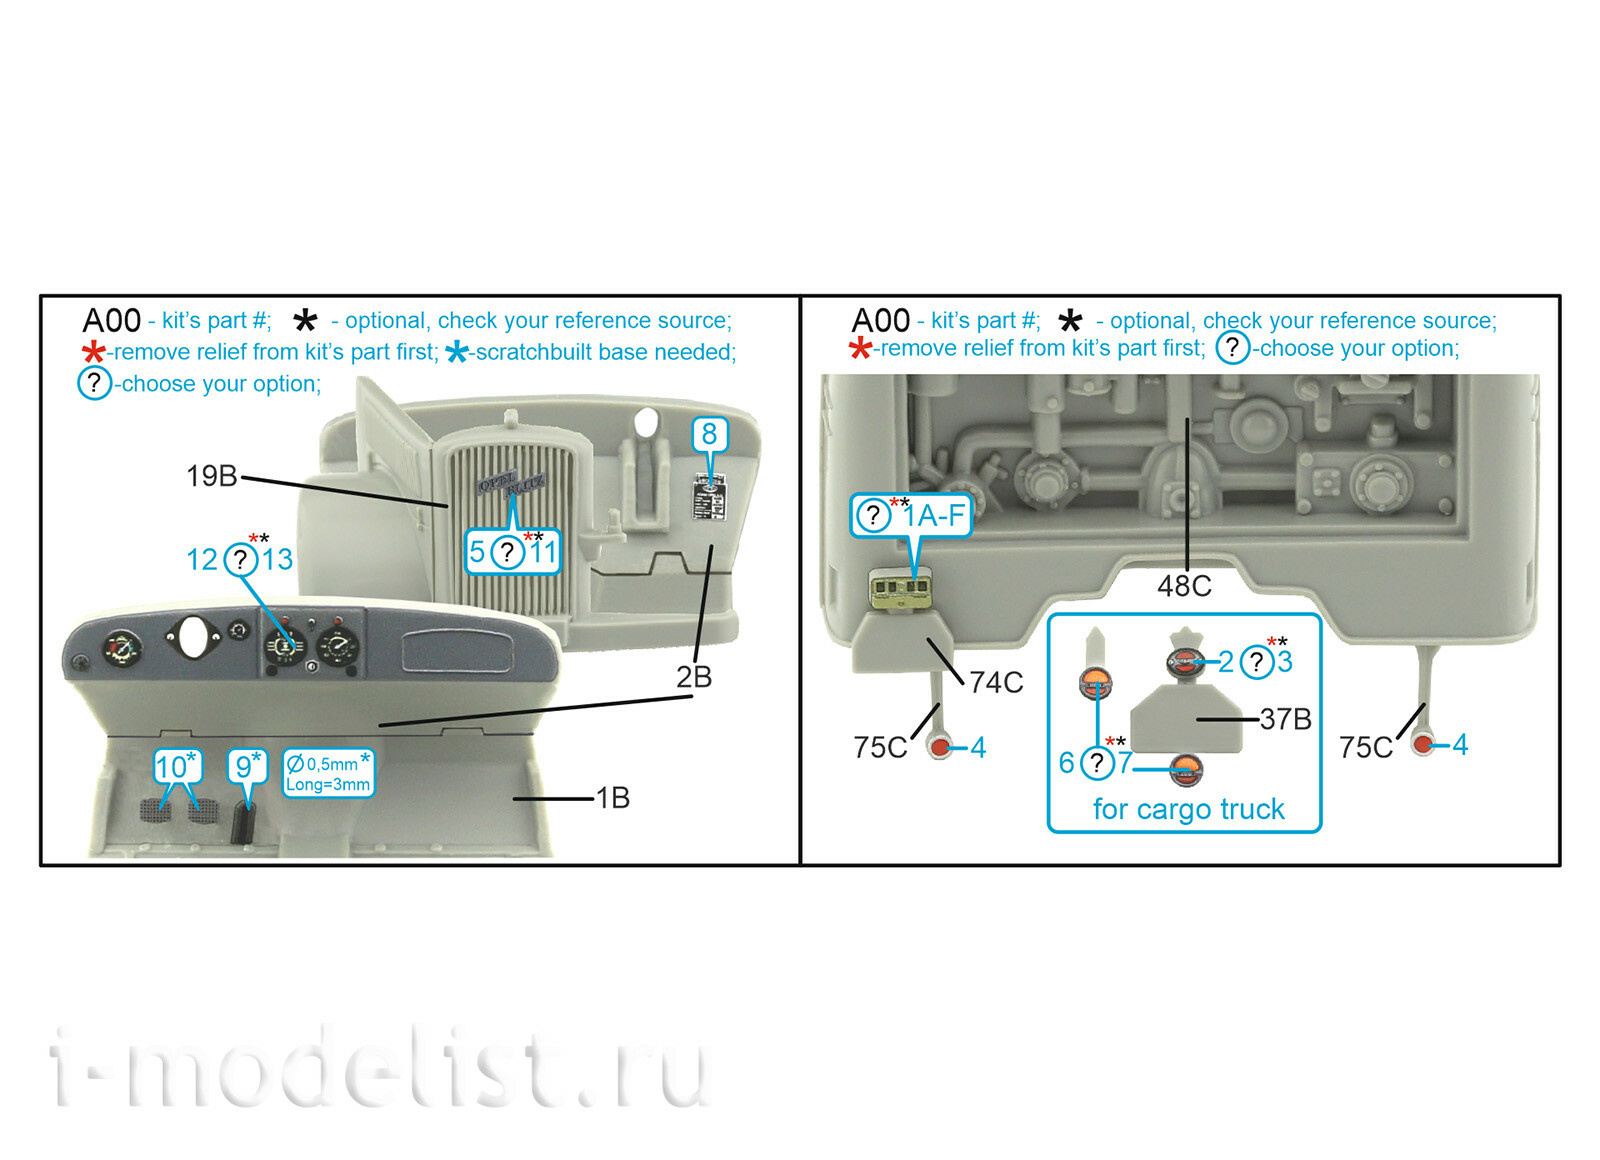 QD48294 Quinta Studio 1/48 3D Декаль интерьера кабины семейство Opel Blitz (Tamiya/Italeri)